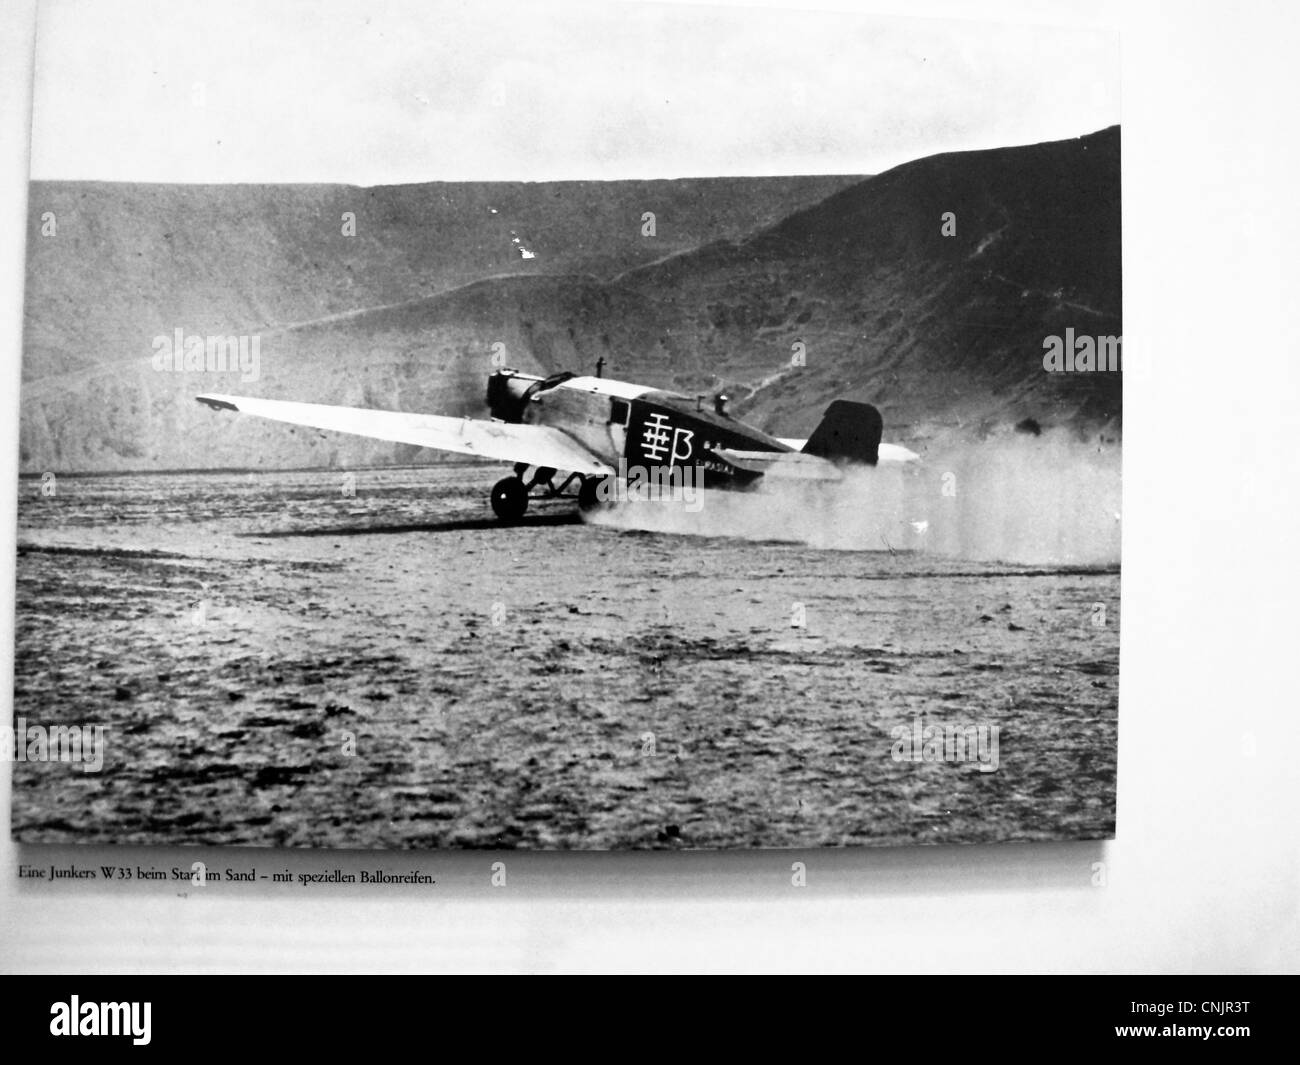 1930 Eurasian Aviation Corporation Foto Stock